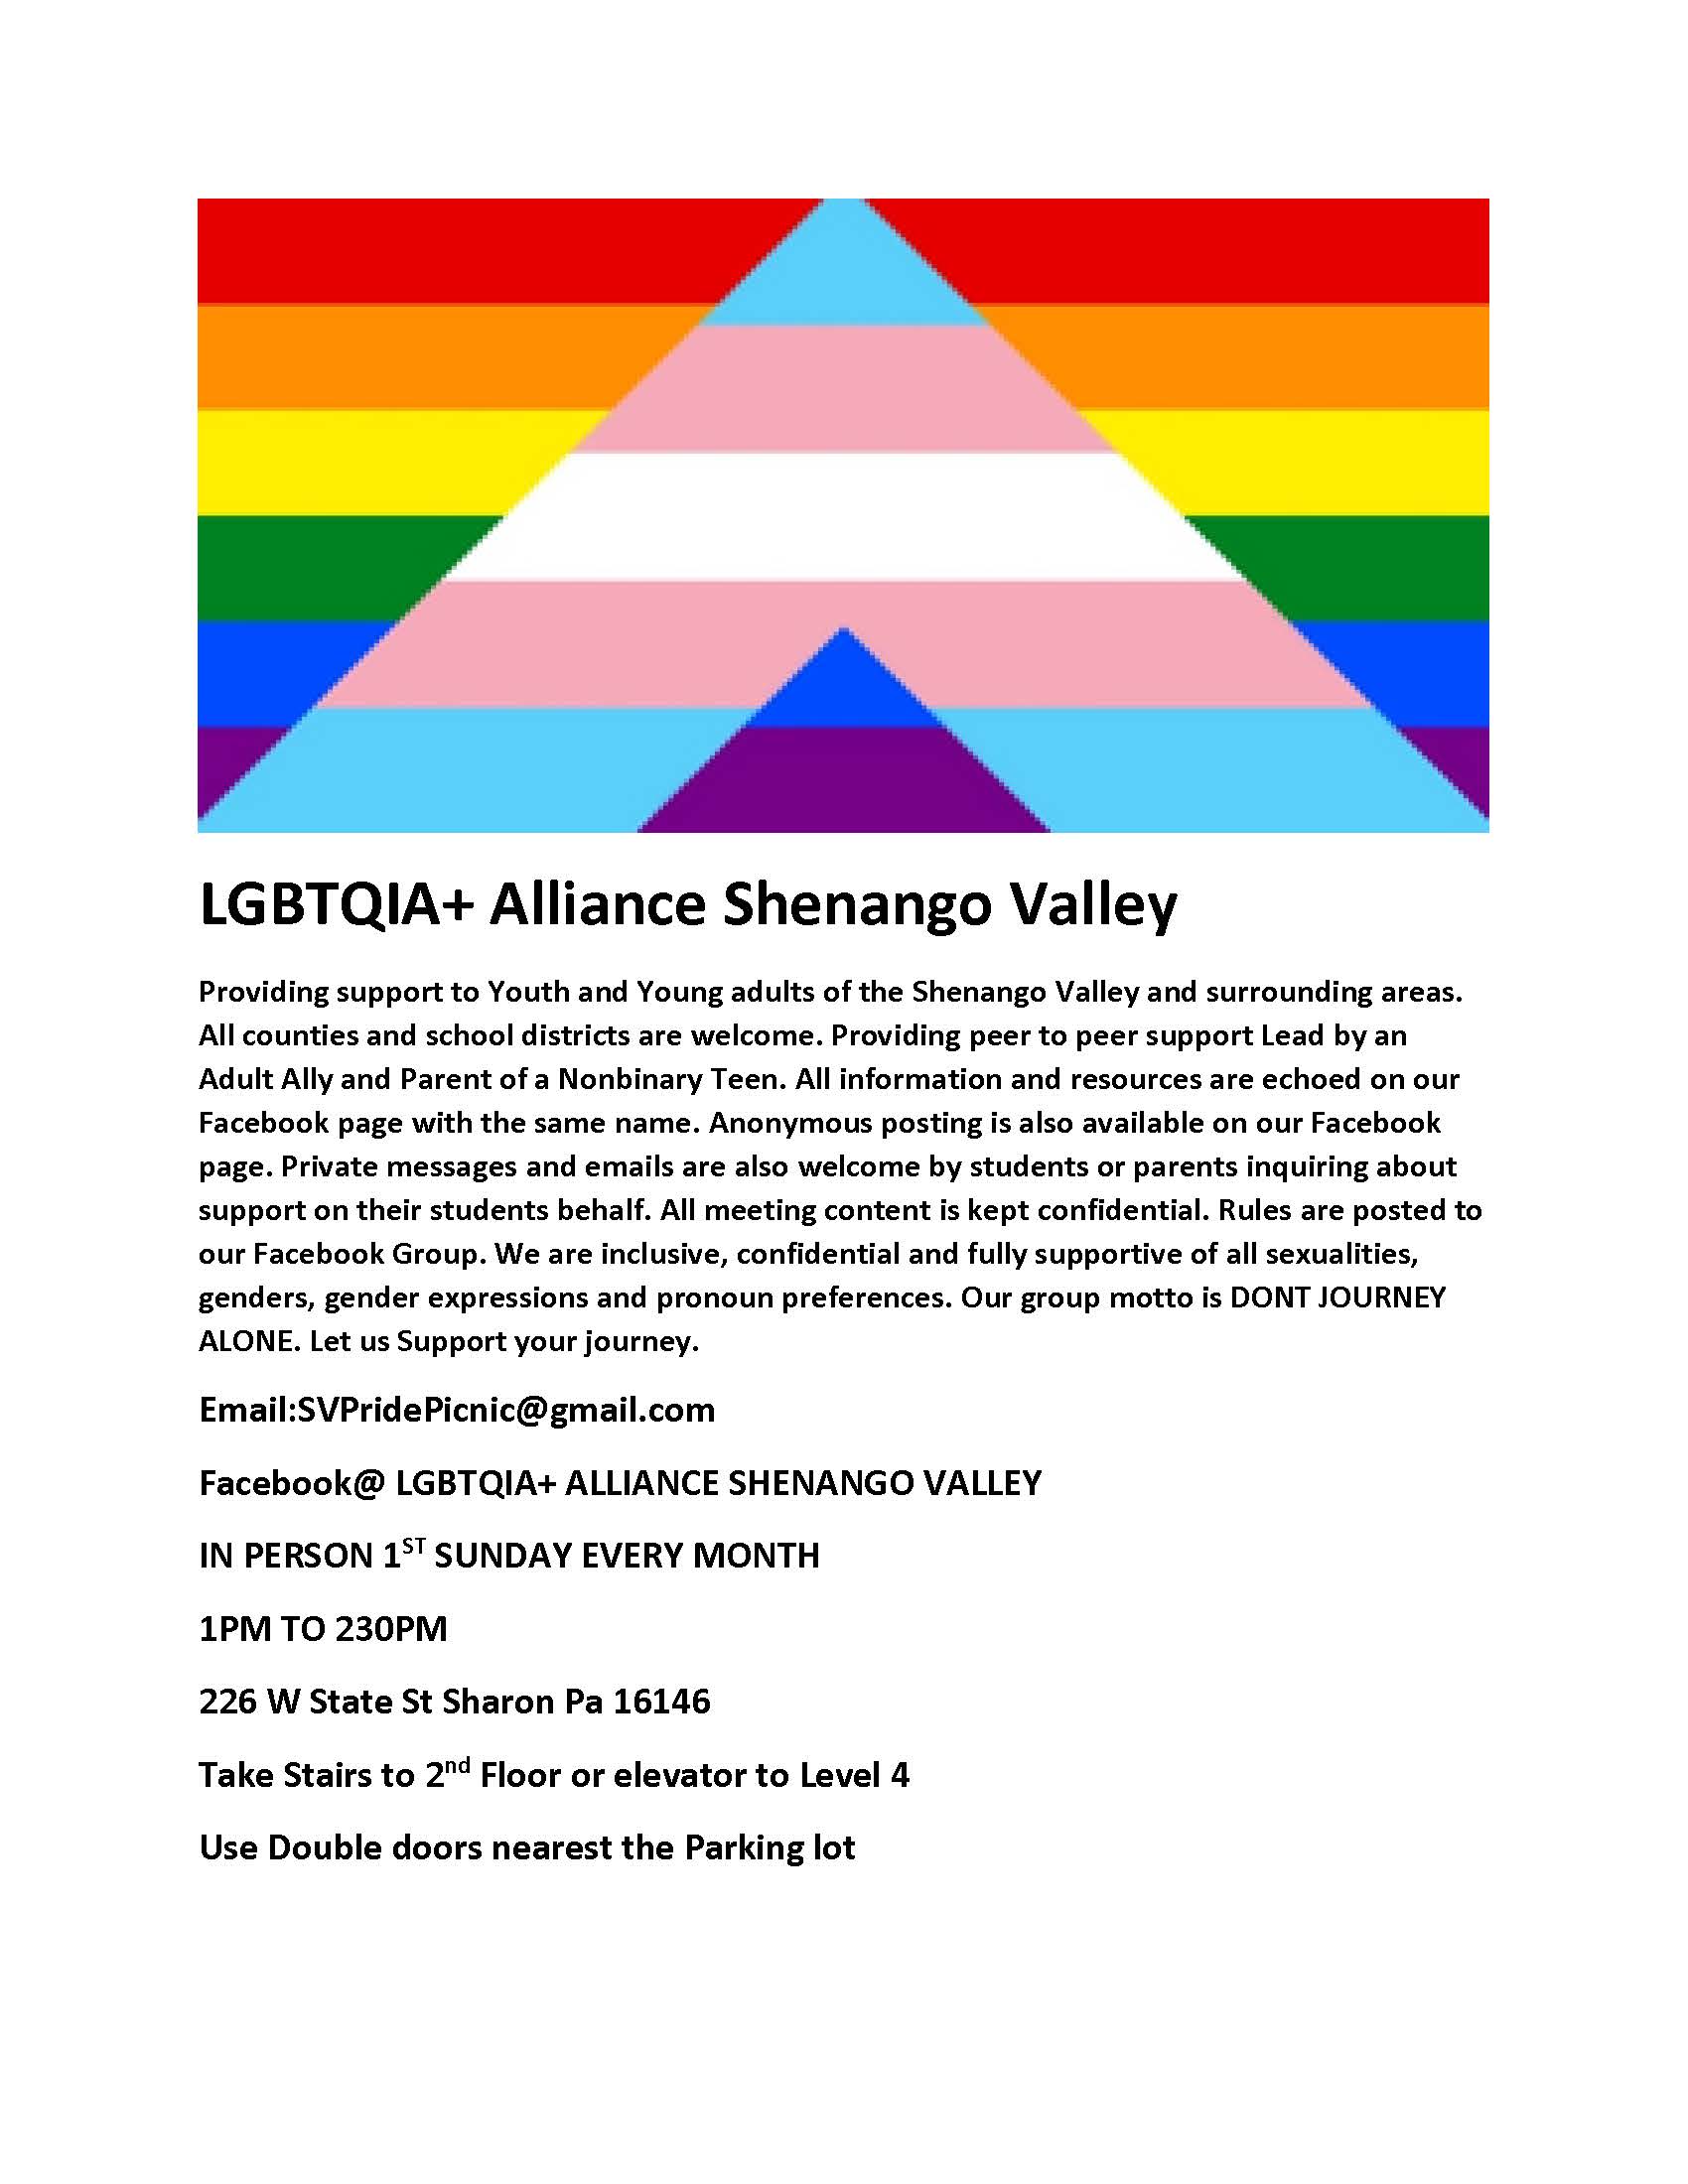 LGBTQIA+ Alliance Shenango Valley for Teens  Flyer